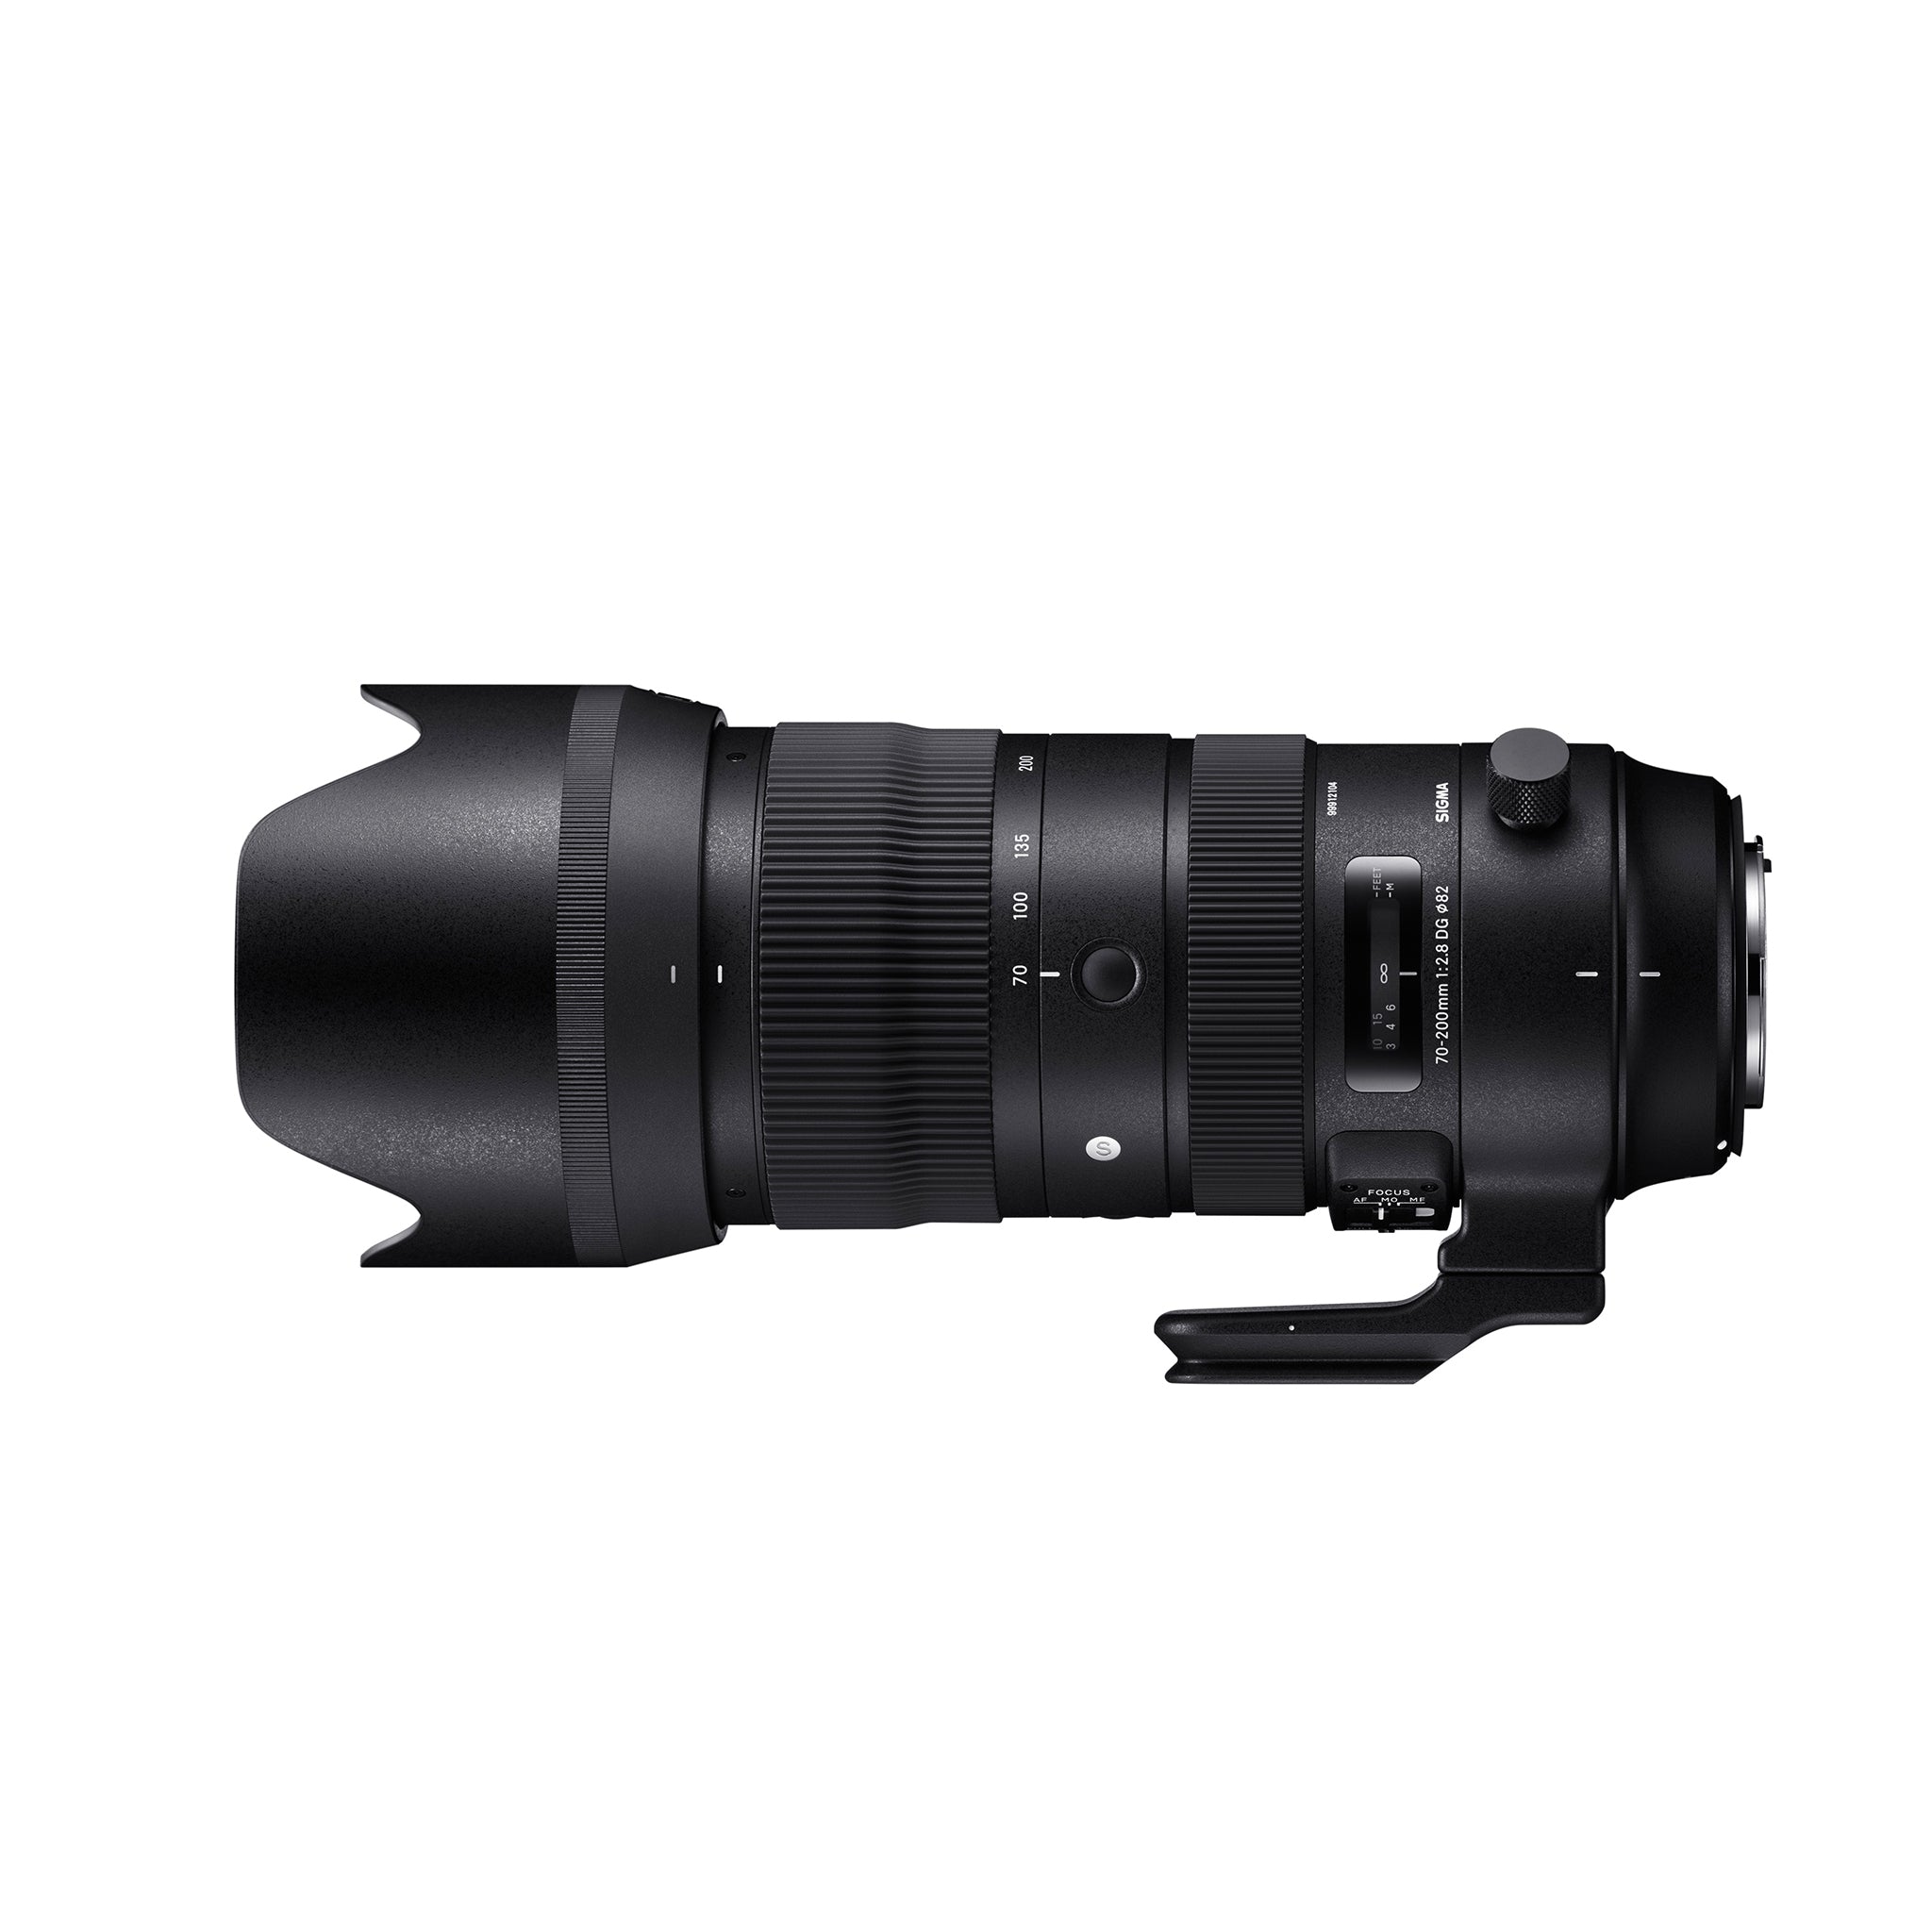 Sigma 70-200mm F2.8 DG OS HSM Sport Lens